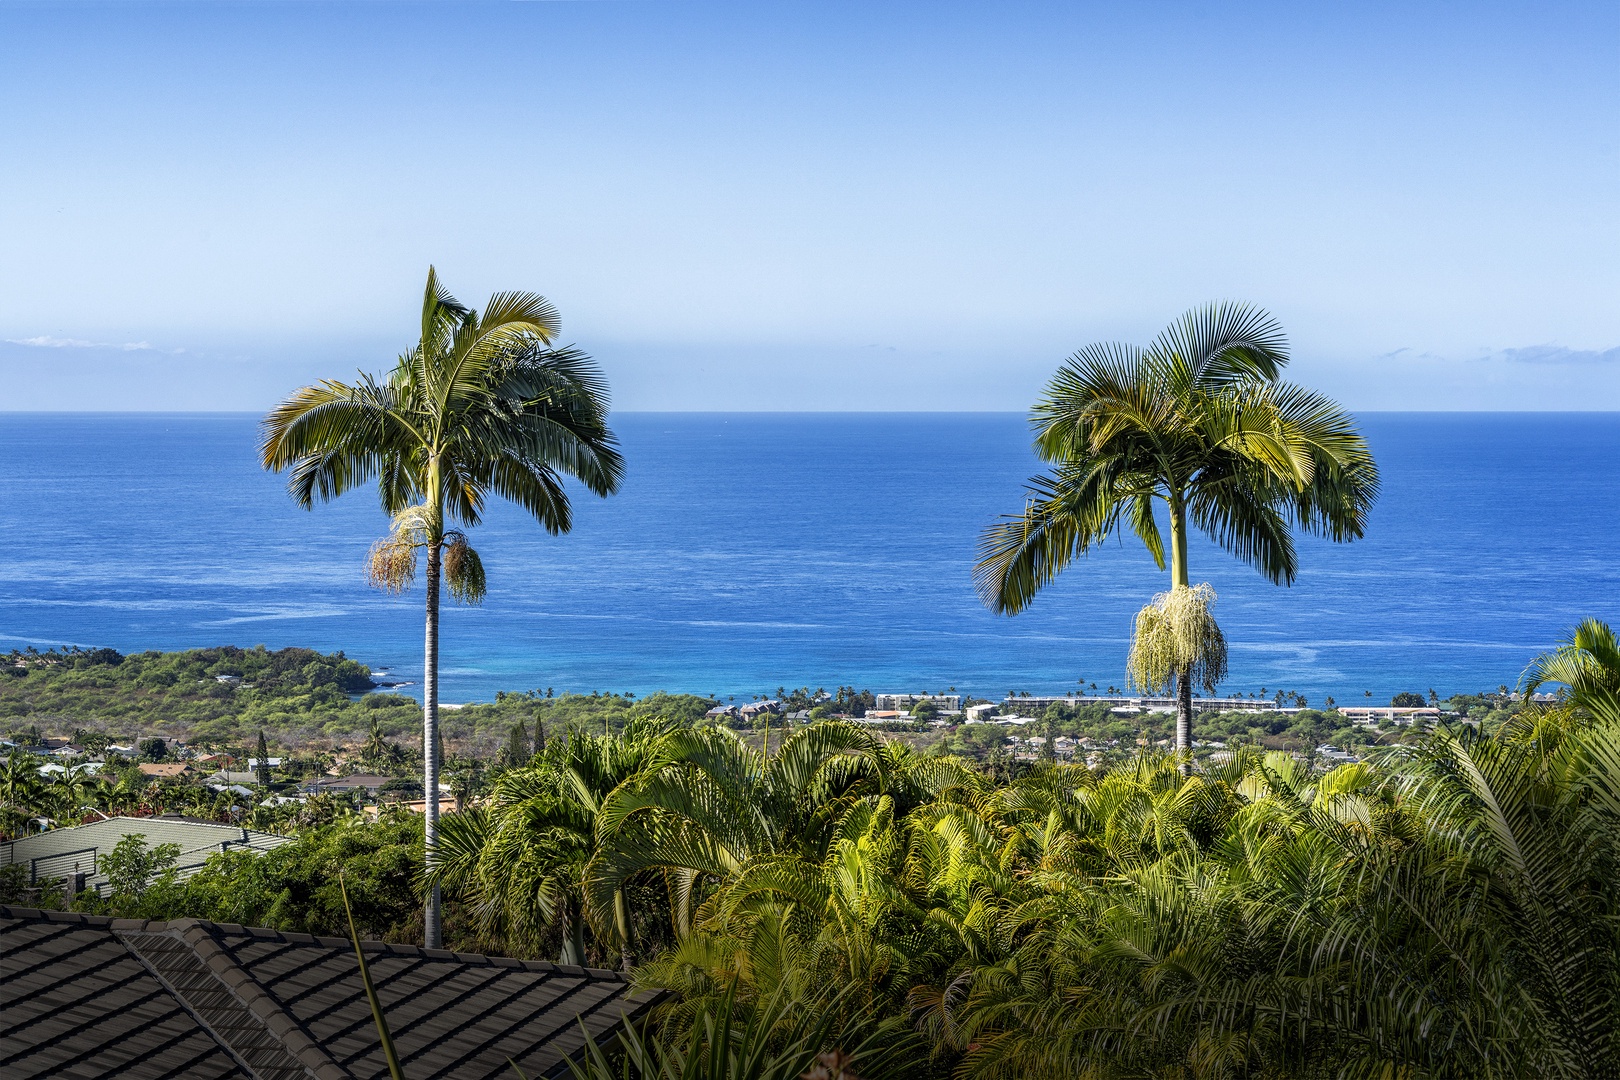 Kailua Kona Vacation Rentals, Hale Aikane - View from the back yard!